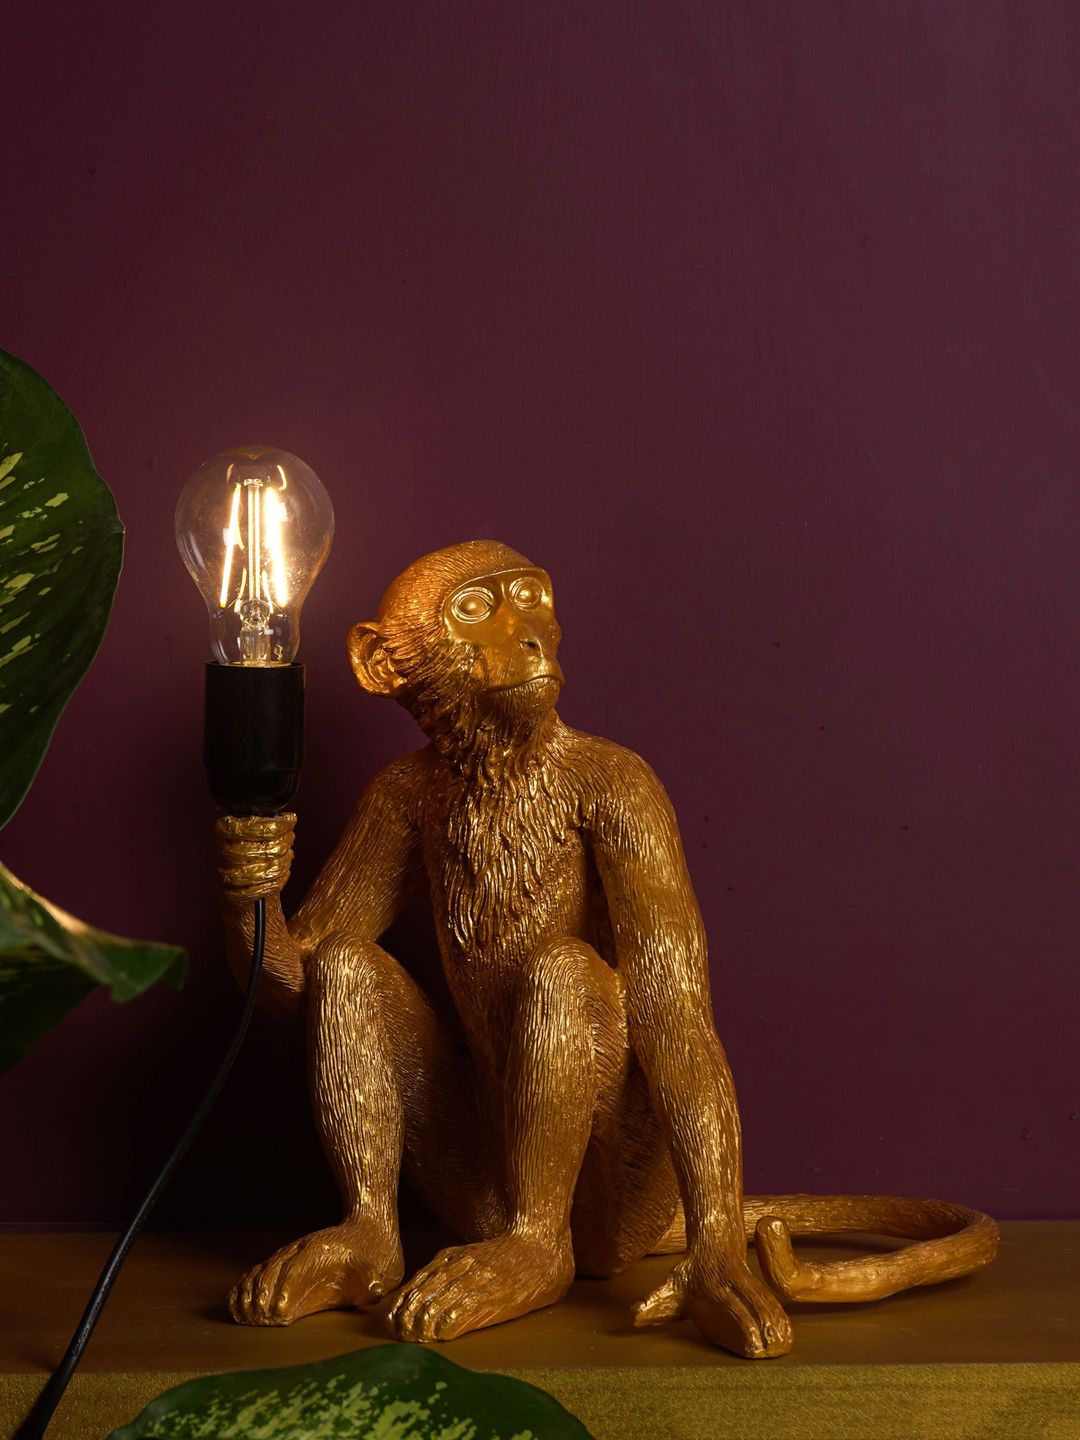 THE ARTMENT Golden Modern Art Monkey Decorative Lamp Price in India